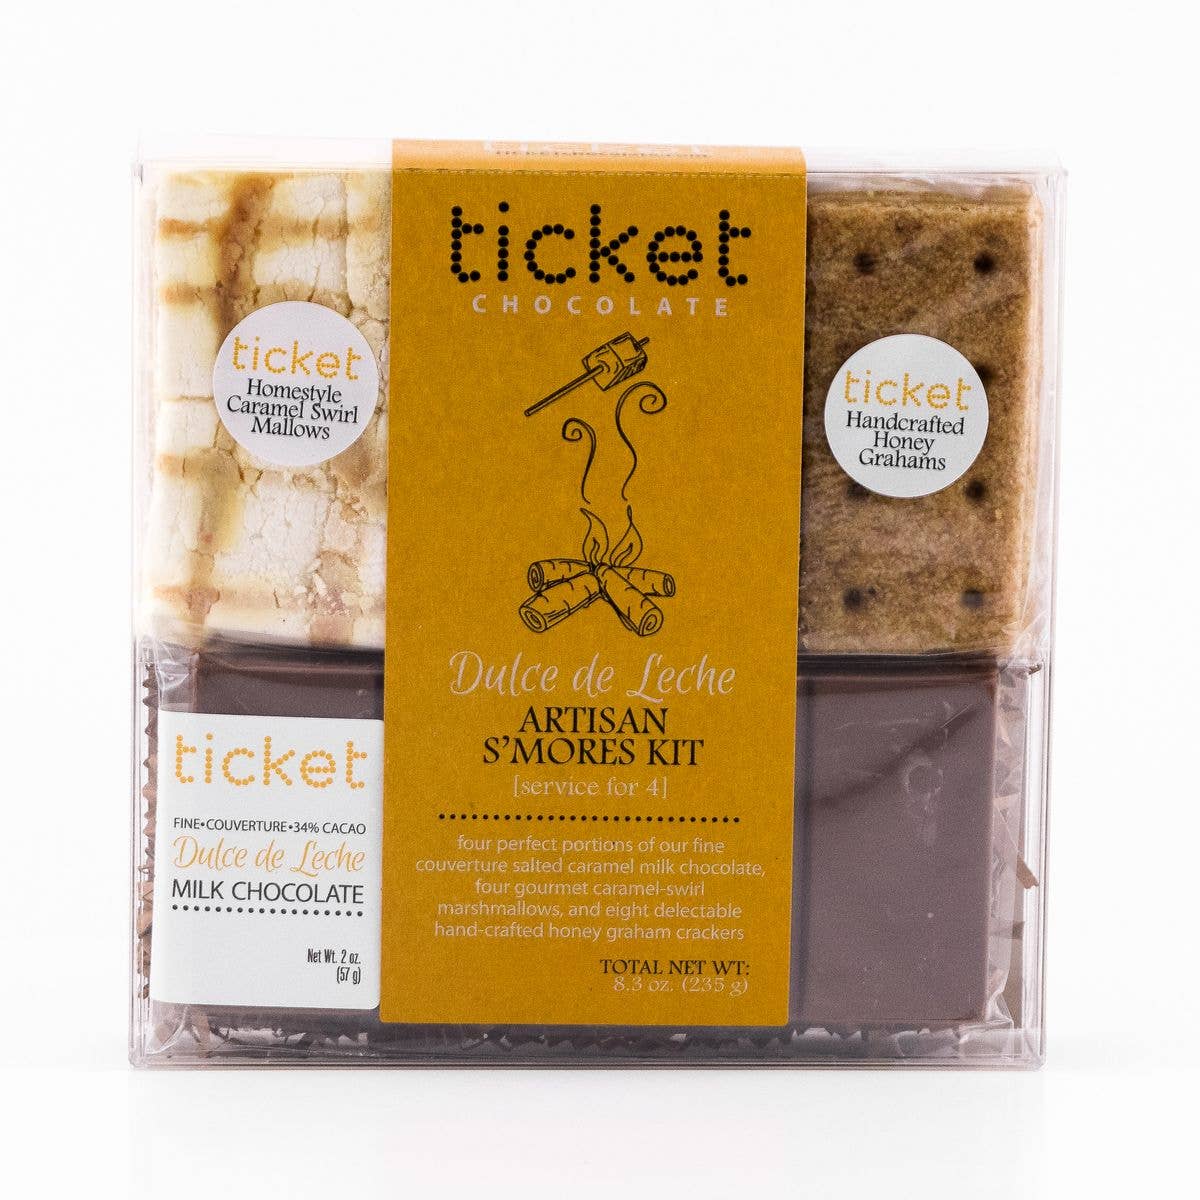 Ticket Chocolate - Artisan Smores Kits - Service for Four